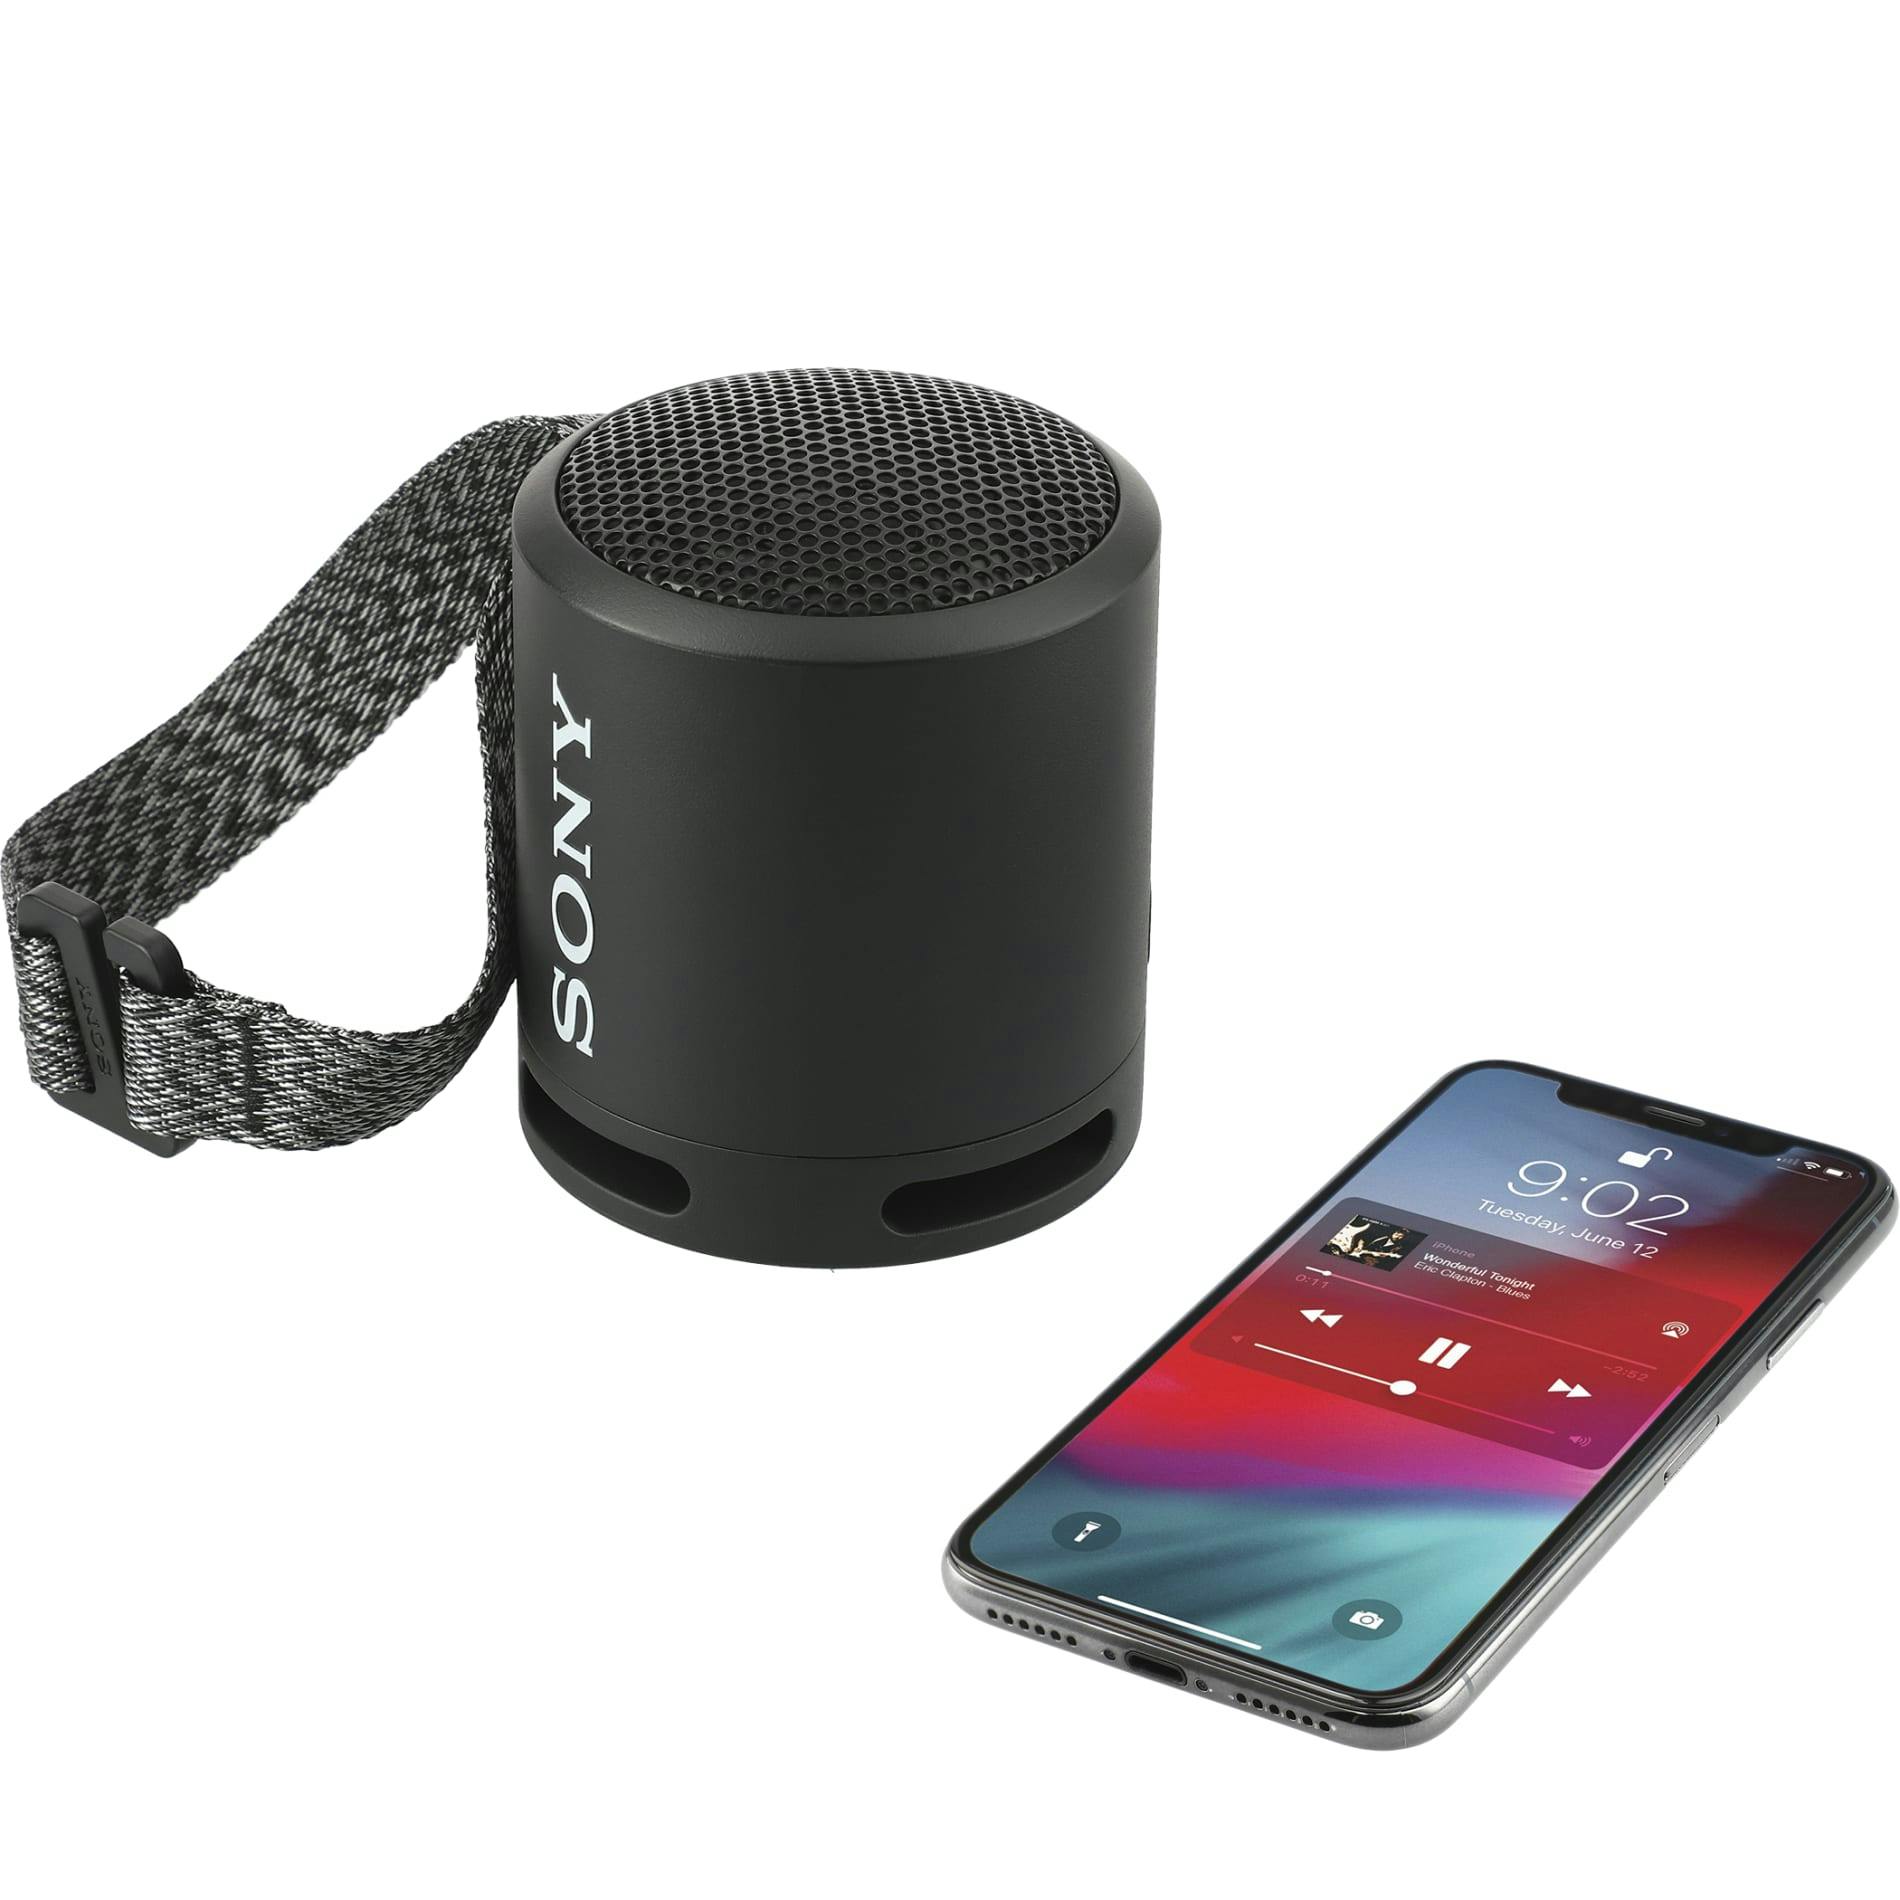 Sony SRS-XB13 Bluetooth Speaker - additional Image 1